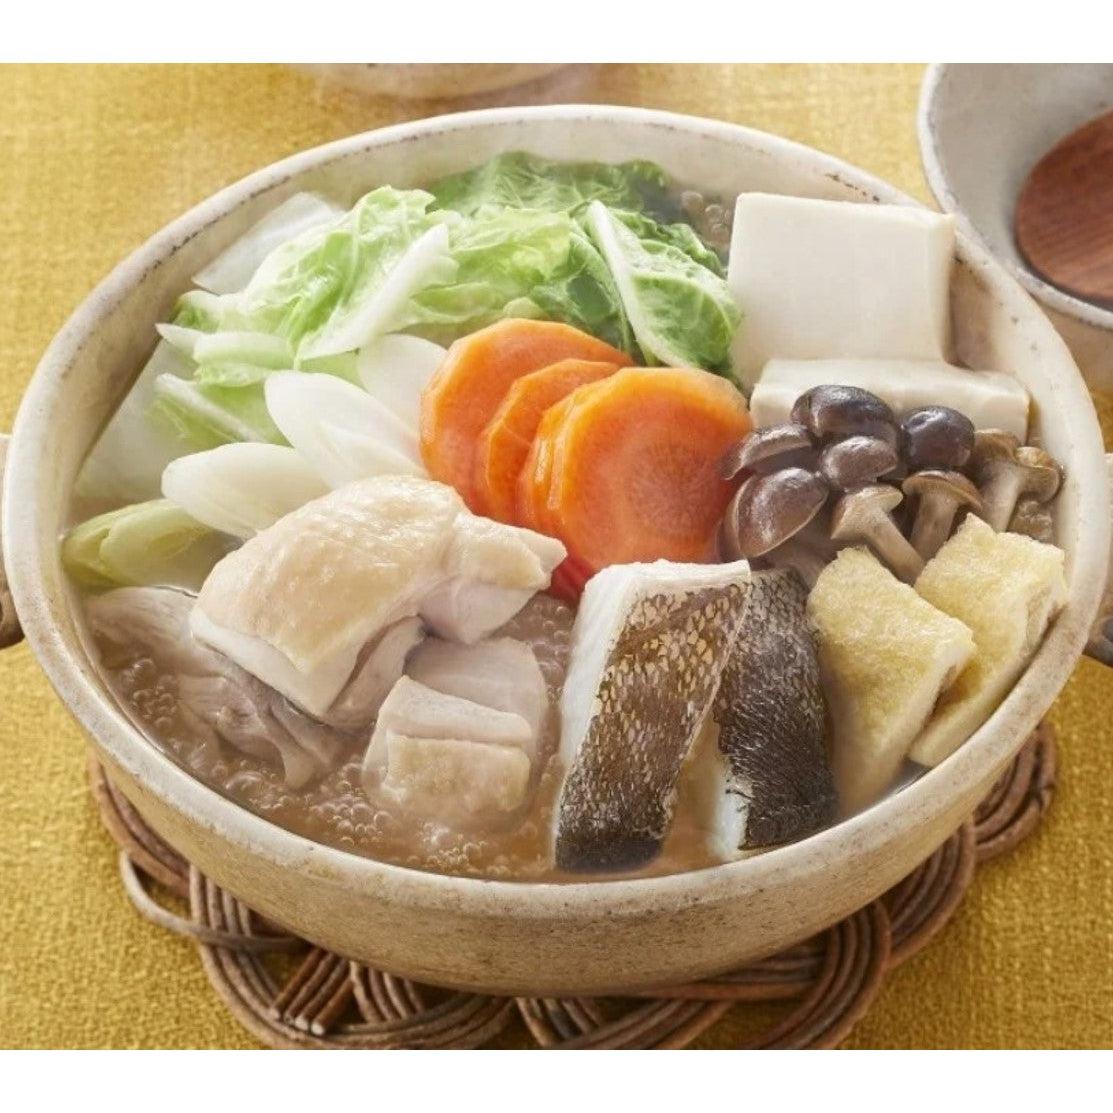 Ajinomoto Nabe Cube Hot Pot Dashi Stock Seafood Flavor 8 Cubes - YOYO JAPAN